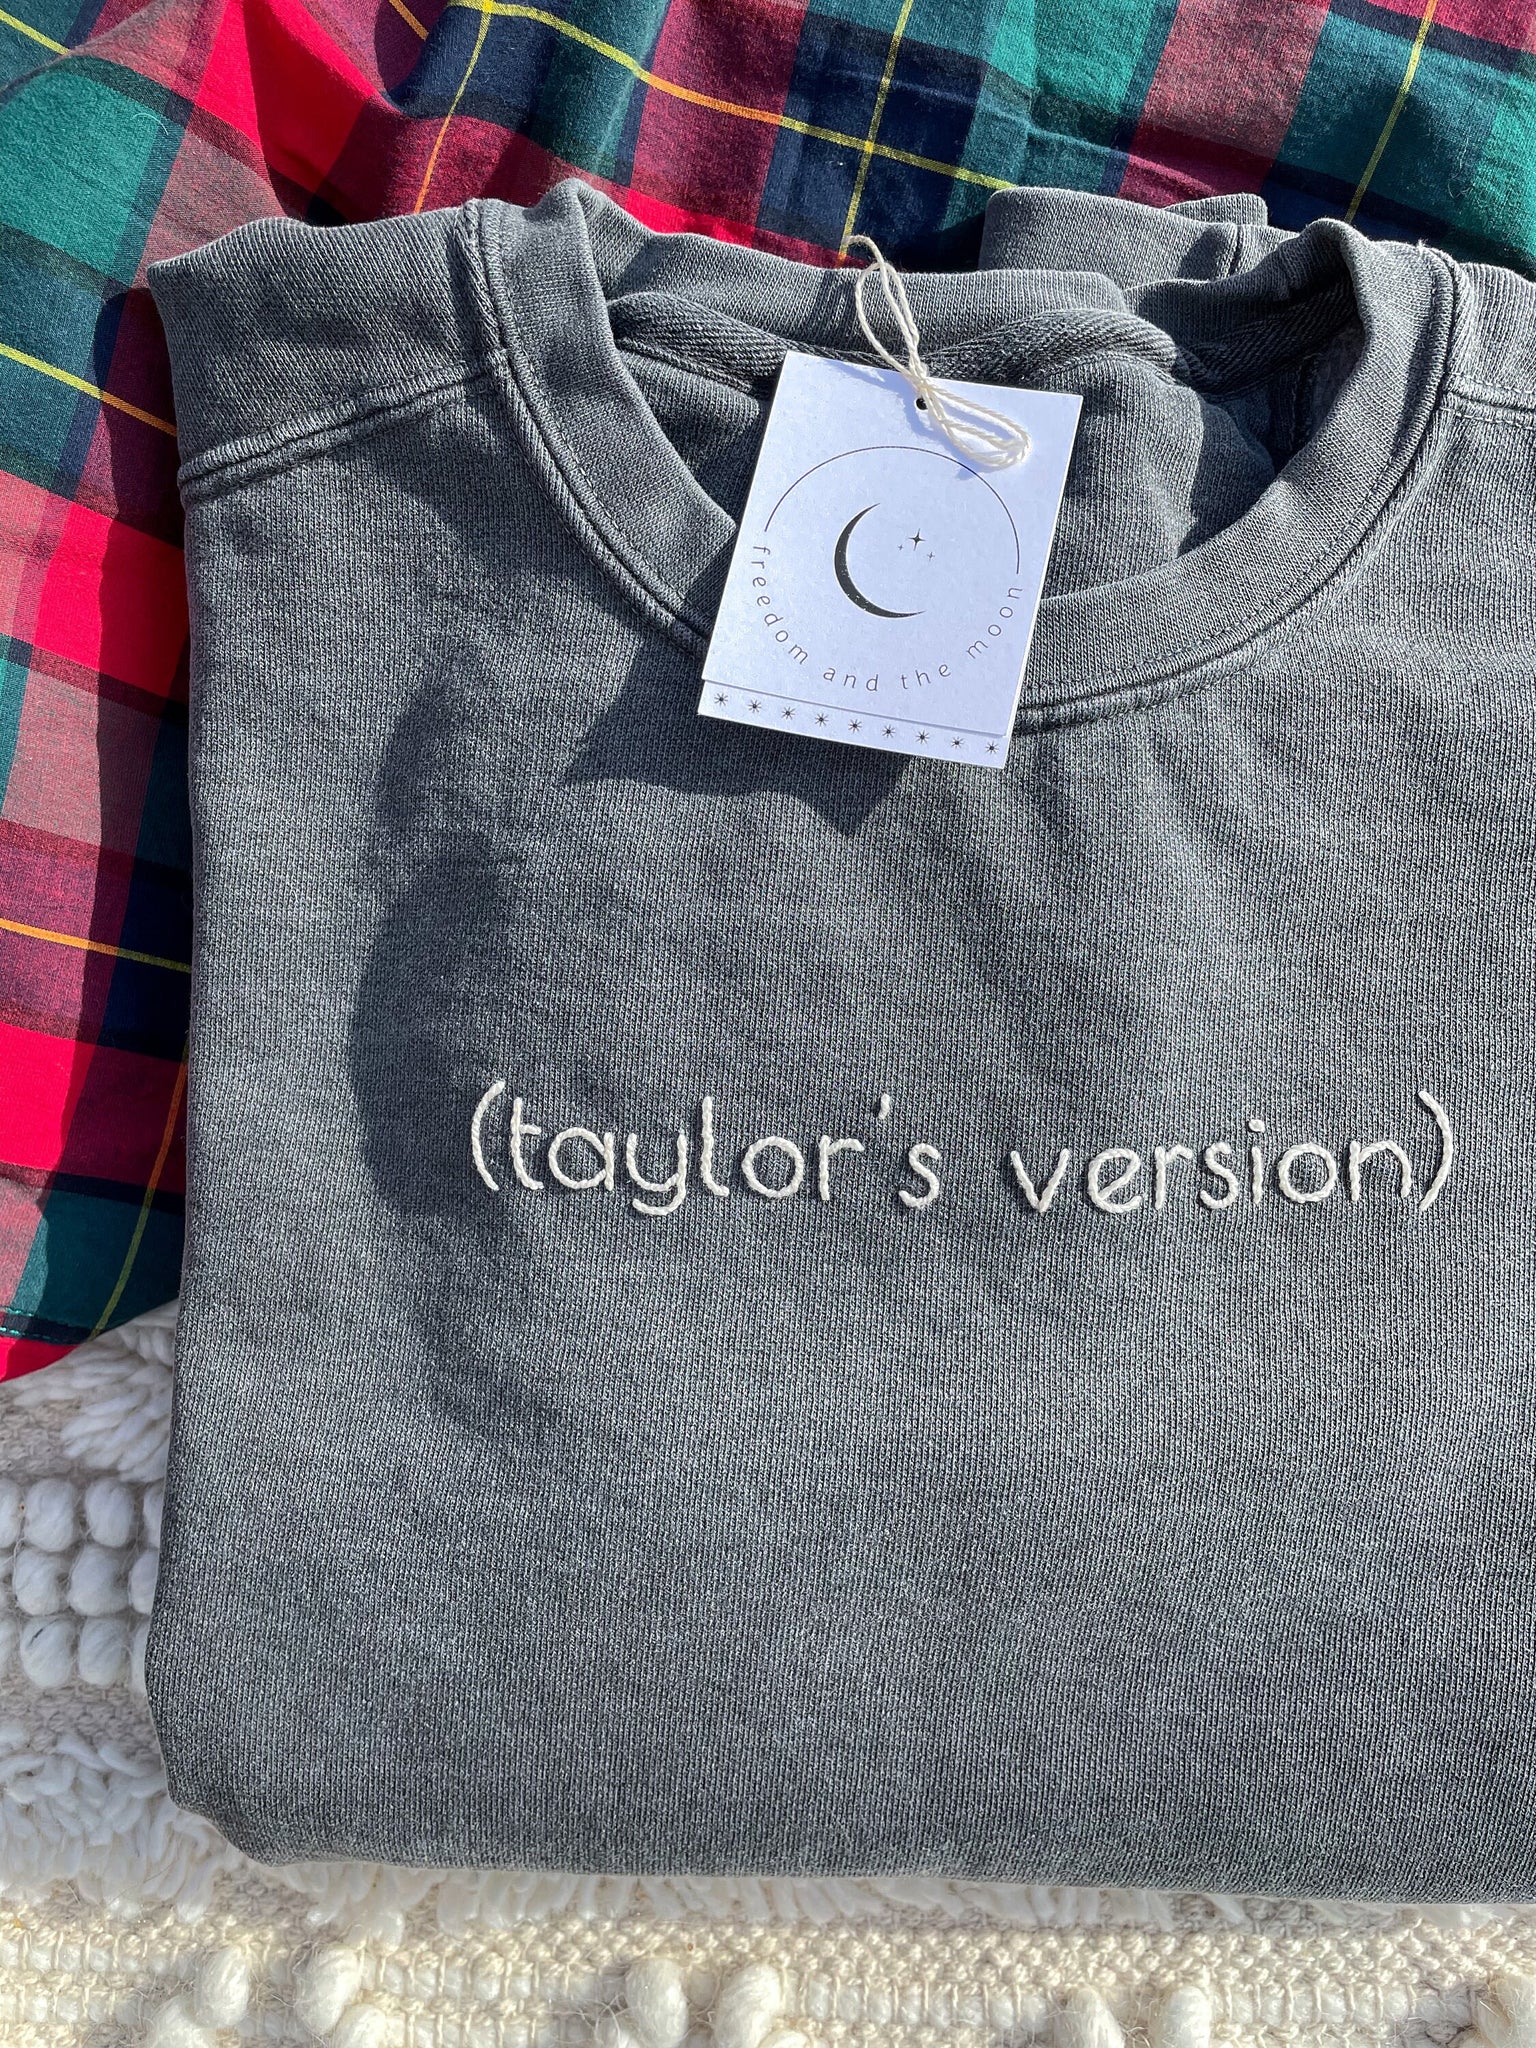 Taylor's Version Hand Embroidered Sweatshirt